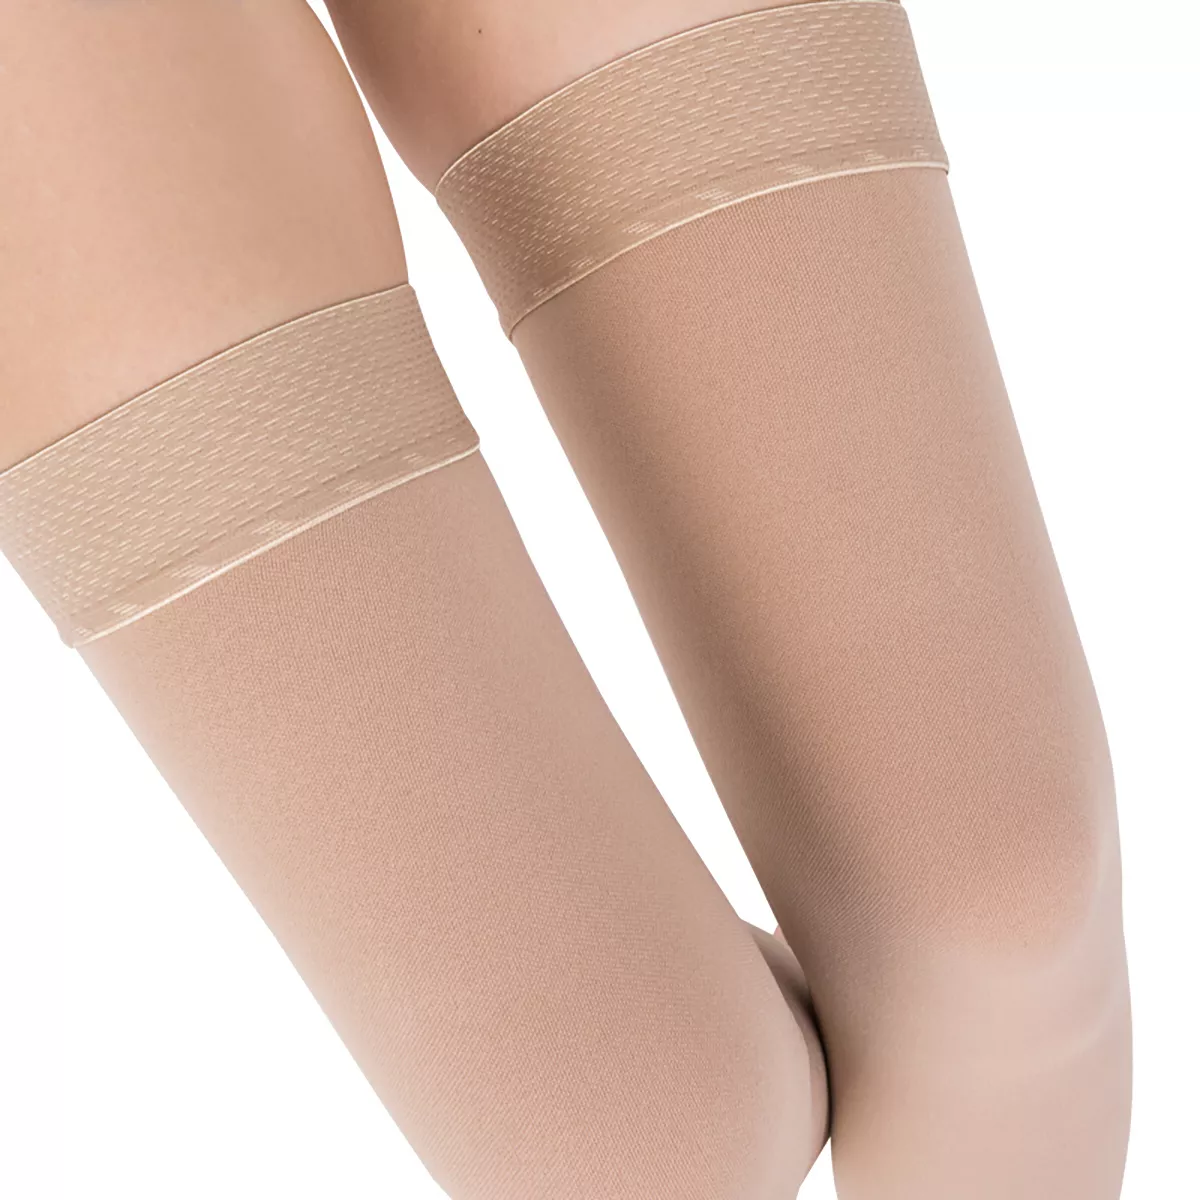 20-30 mmHg Women Thigh High Open Toe Compression Socks – Varcoh ®  Compression Socks